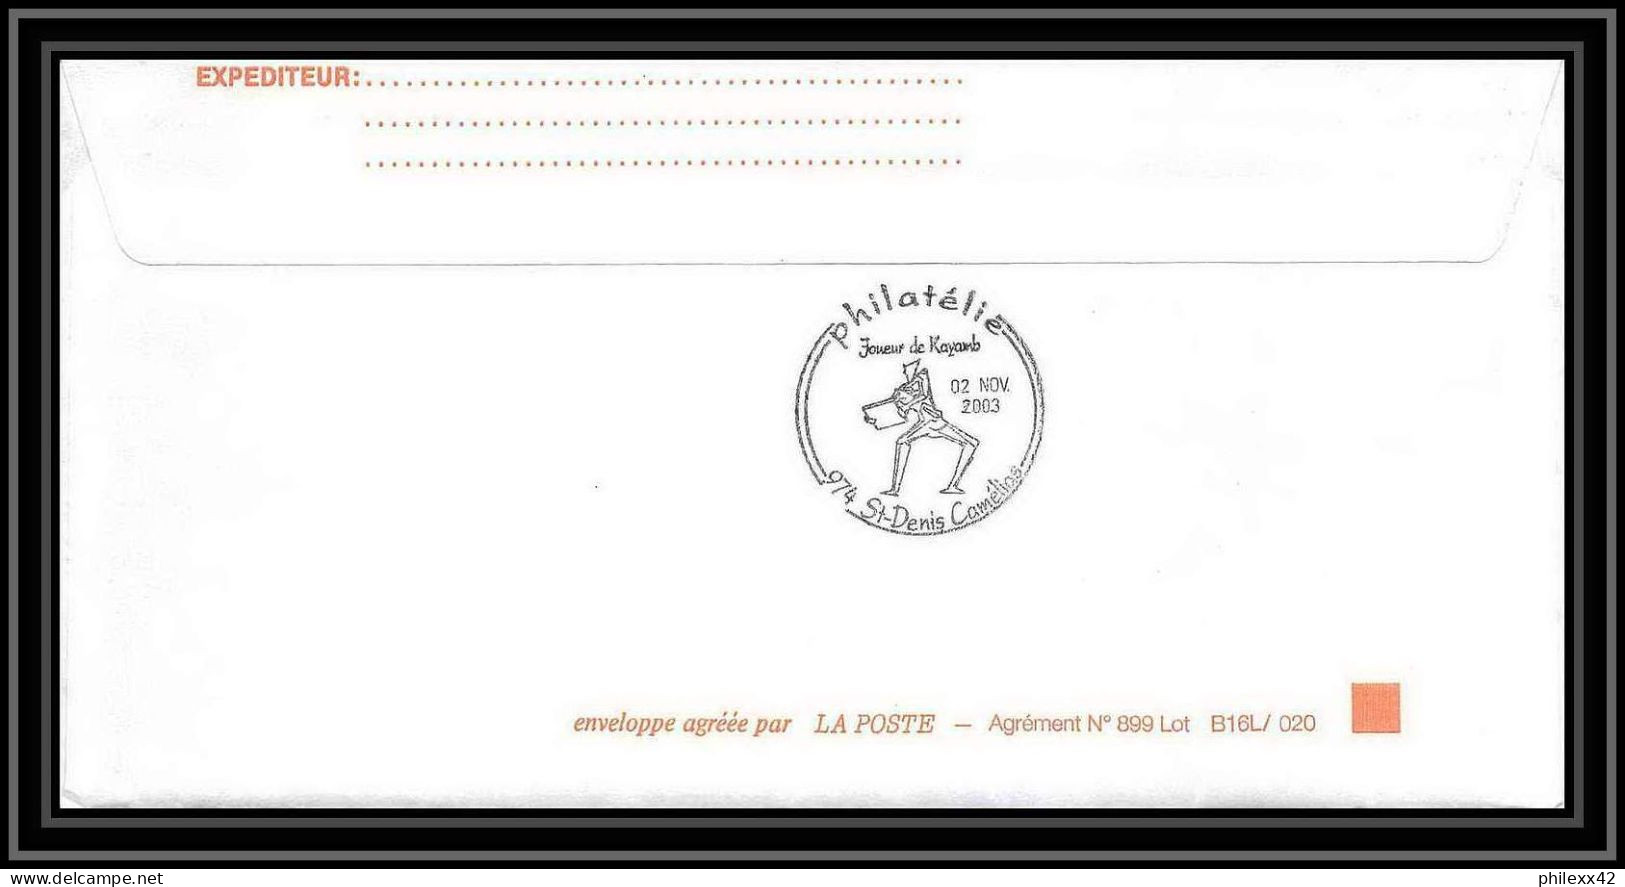 2416 Dufresne 2 Signé Signed Op 2003/3 N°363 12/11/2003 ANTARCTIC Terres Australes (taaf) Lettre Cover - Storia Postale